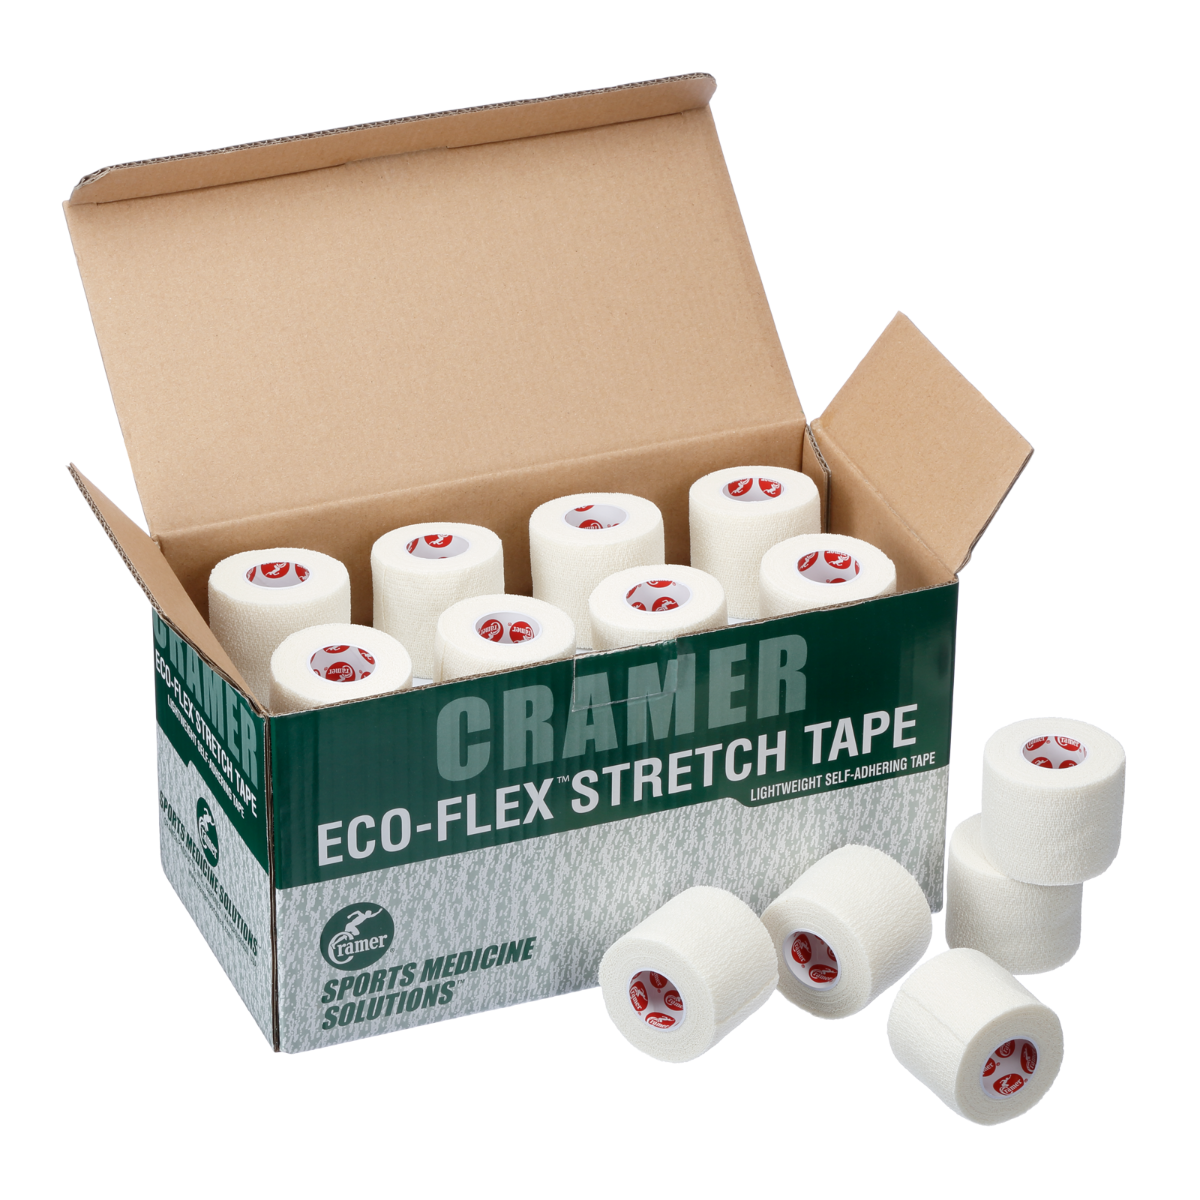 Eco-Flex Stretch Tape